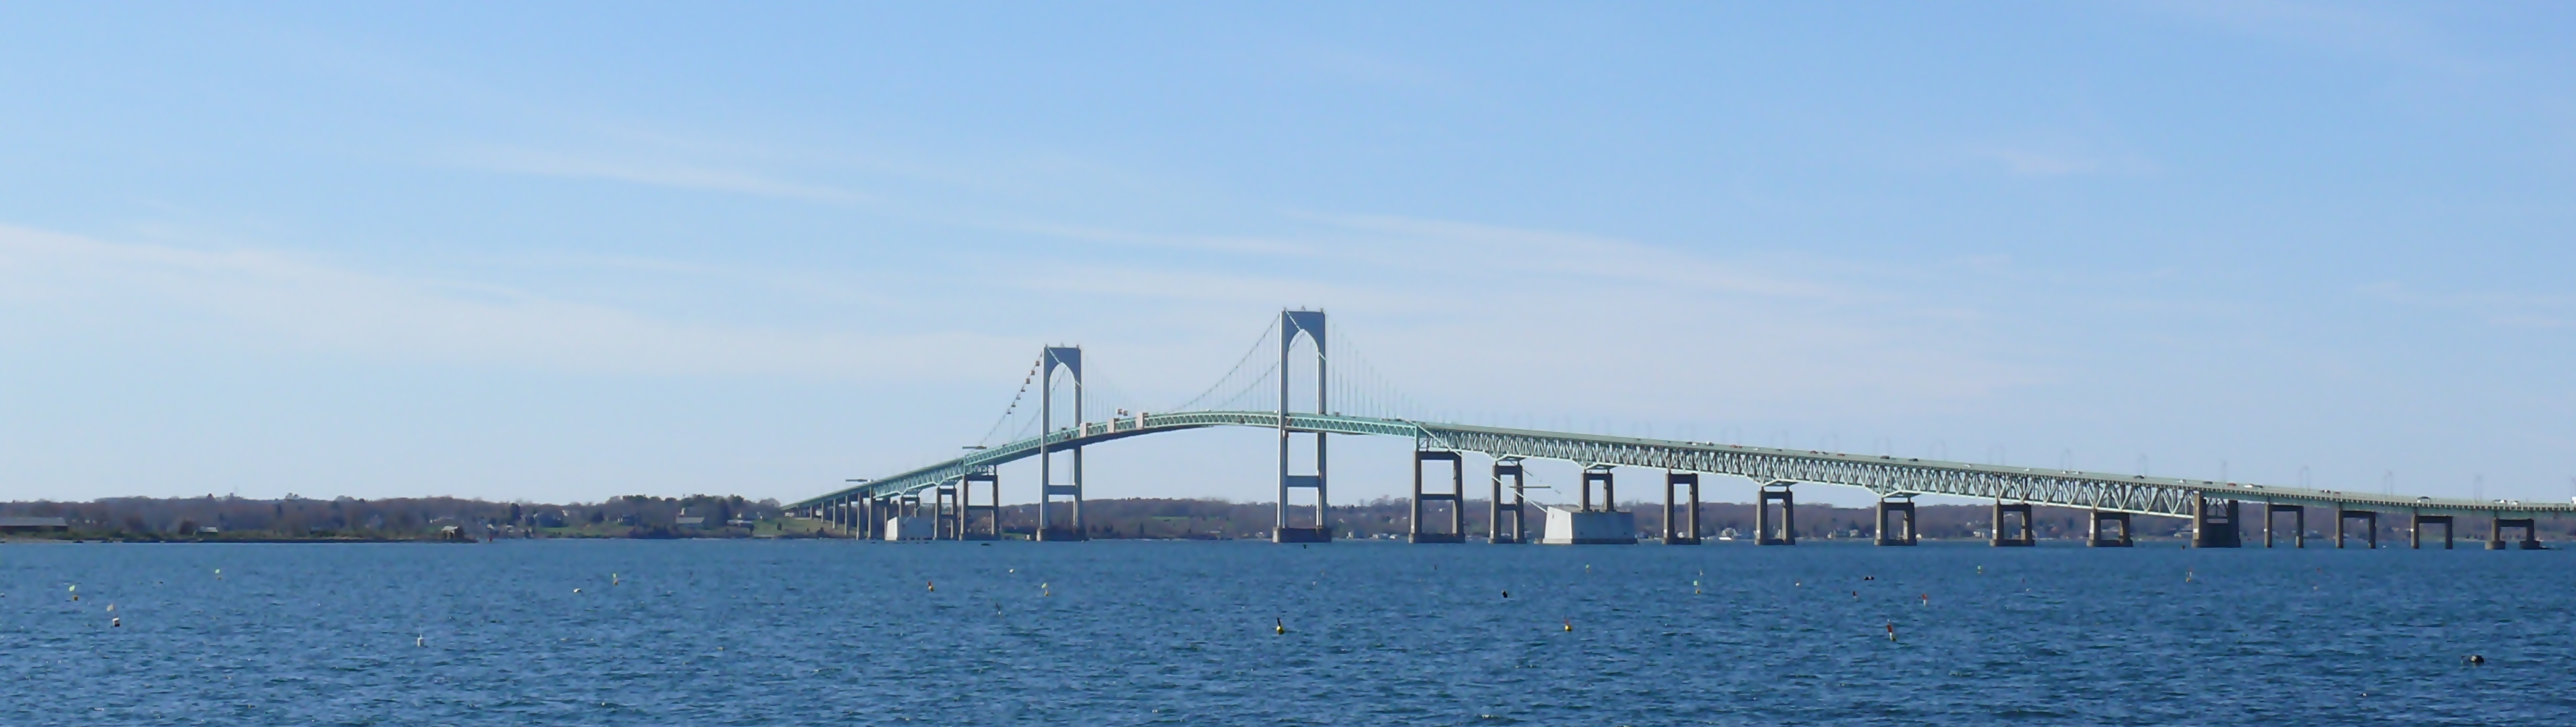 File:Newport Claiborne Pell Bridge 06.JPG - Wikimedia Commons